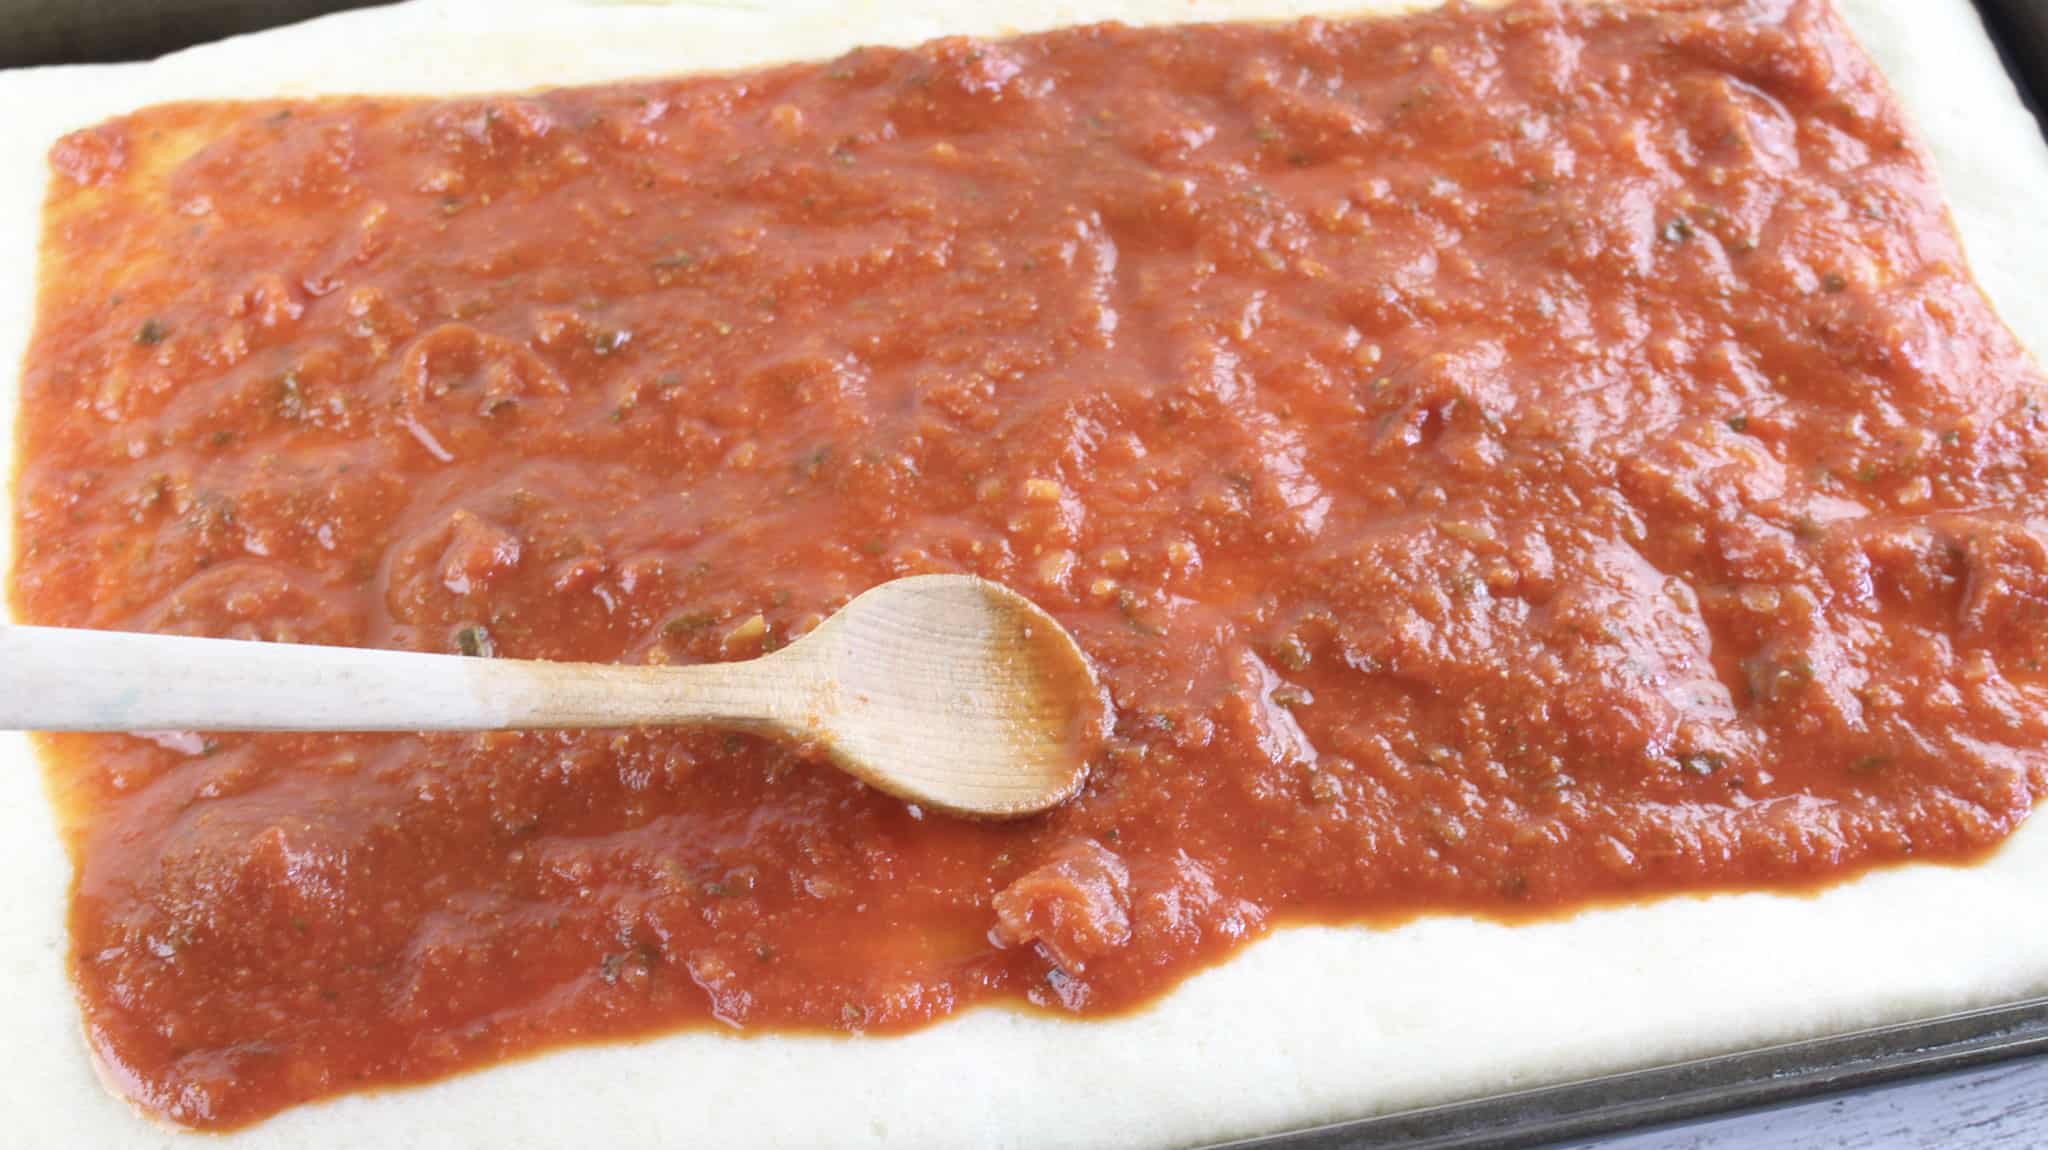 marinara sauce being spread evenly over pizza dough. 